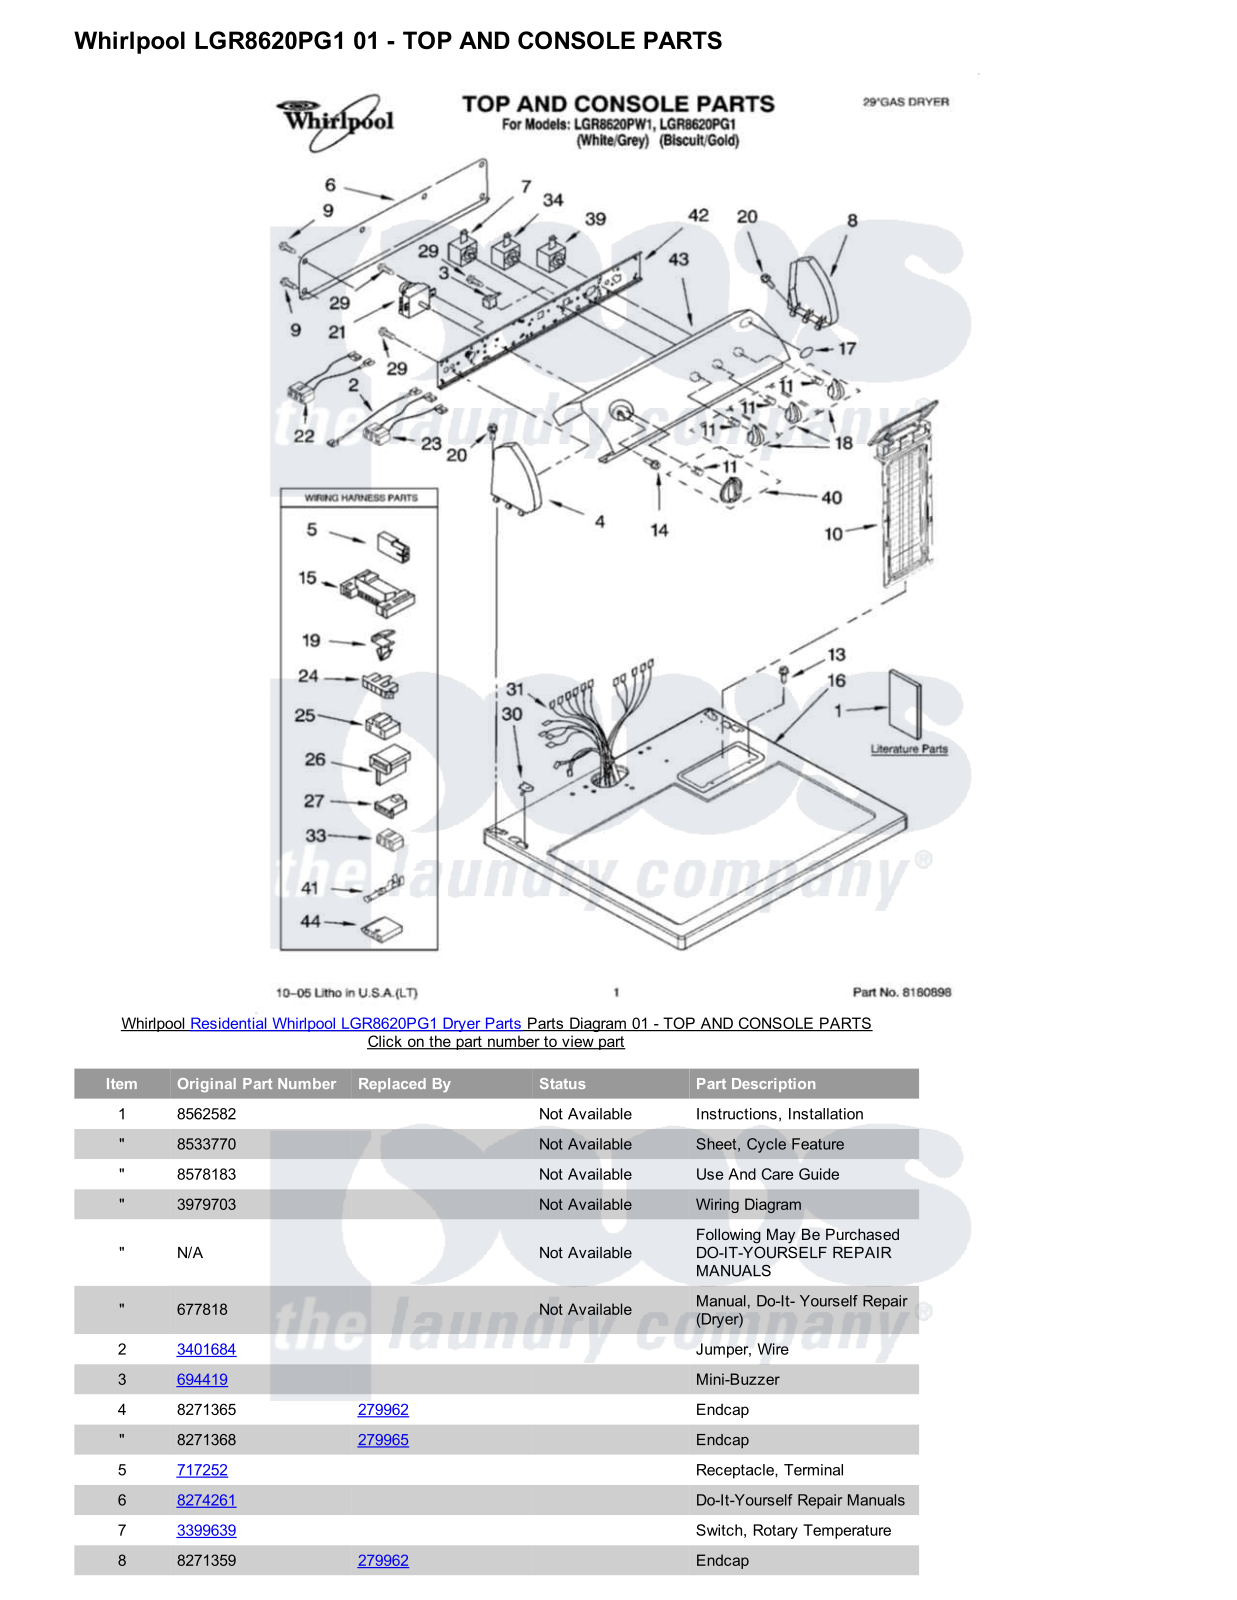 Whirlpool LGR8620PG1 Parts Diagram